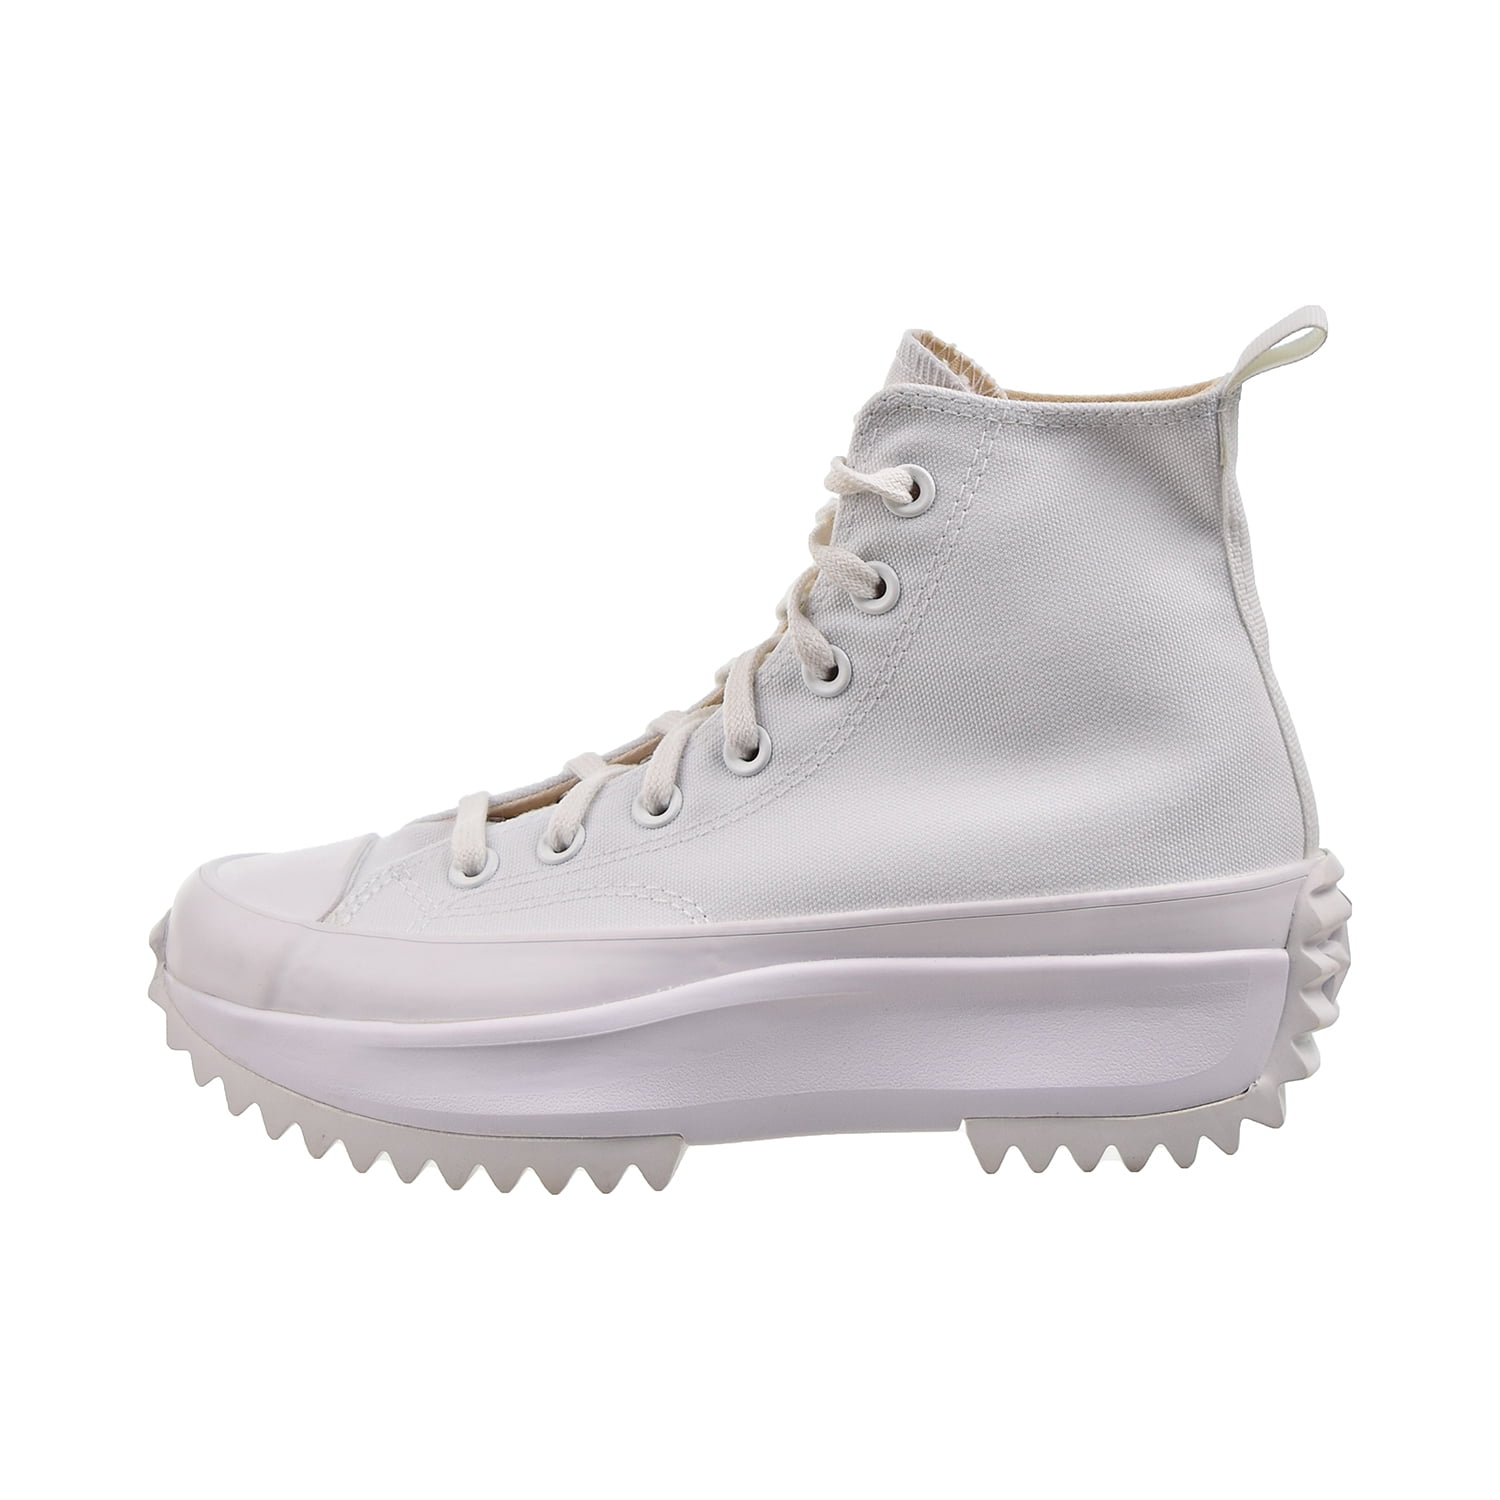 Converse Run Star Hike Hi Men's Shoes White 170777c 